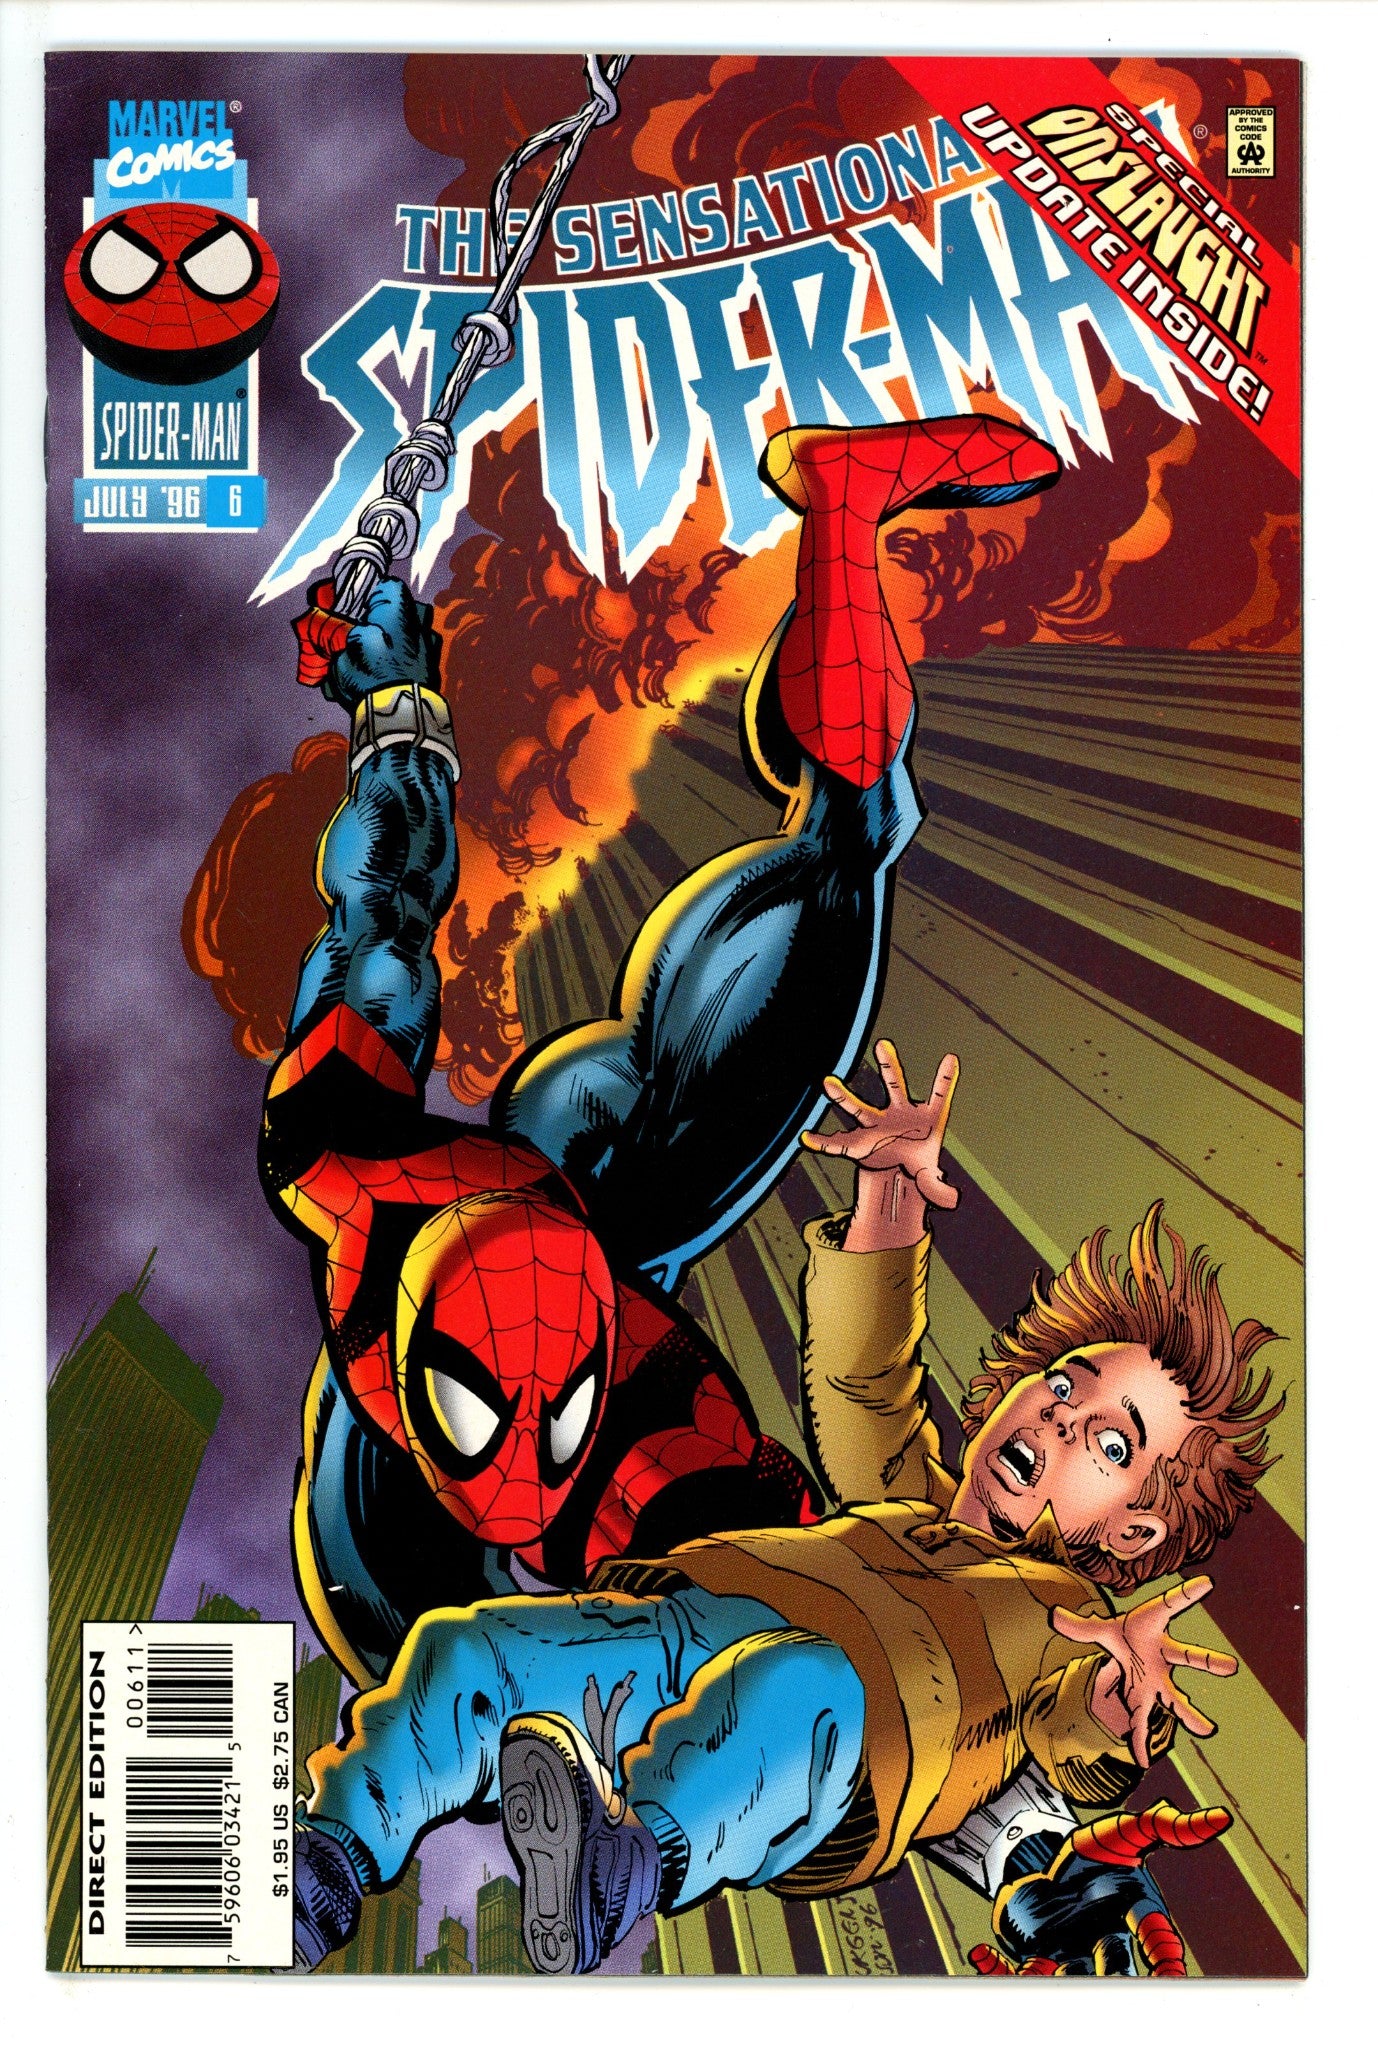 The Sensational Spider-Man Vol 1 6 (1996)